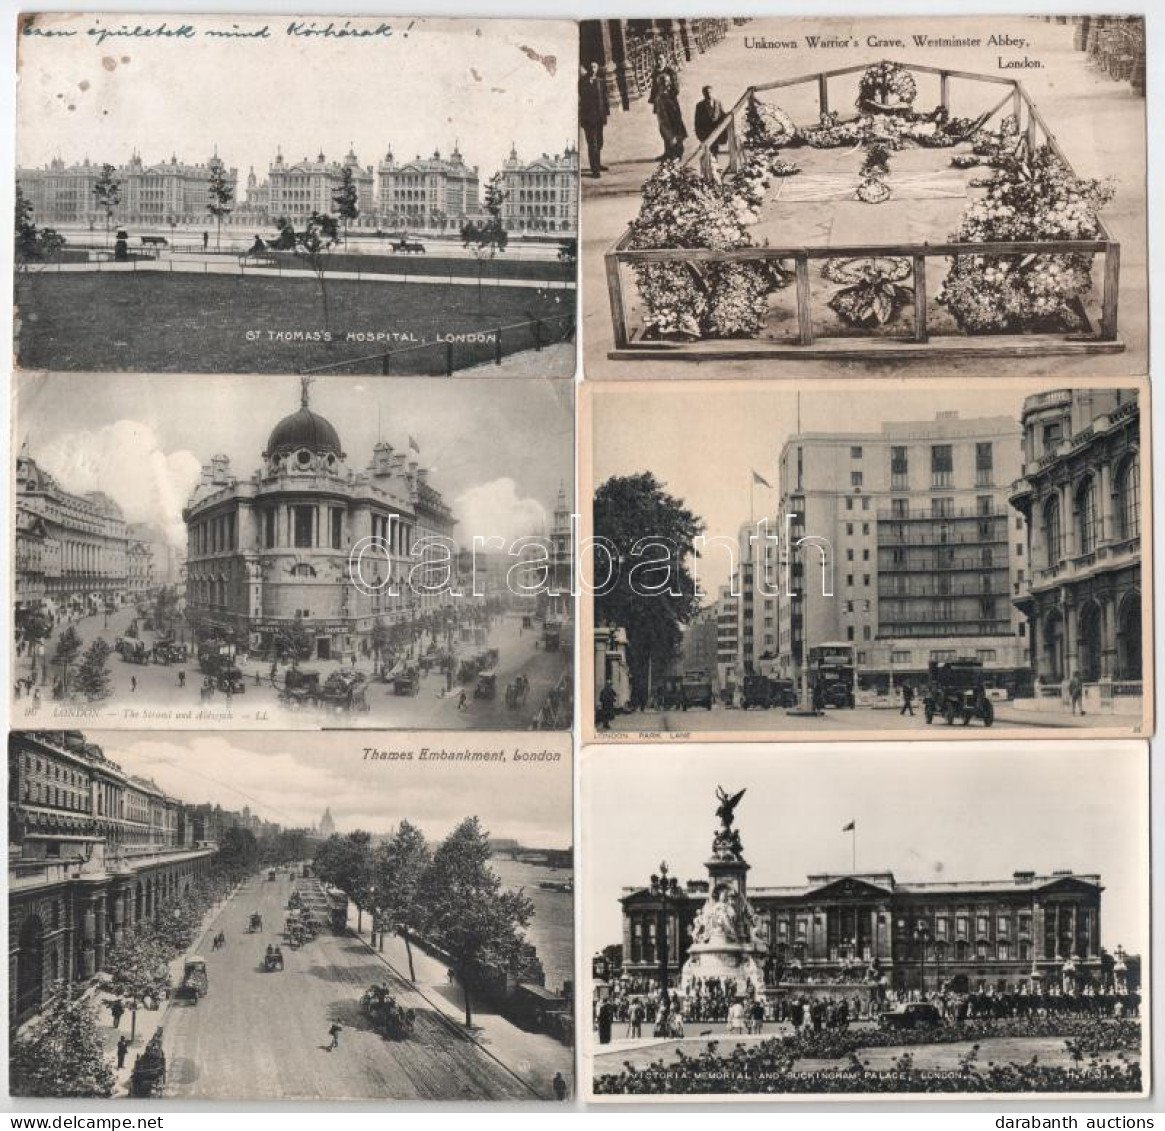 **, * LONDON - 40 Db RÉGI Angol Város Képeslap Szép állapotban / 40 Pre-1945 British Town-view Postcards In Nice Conditi - Unclassified